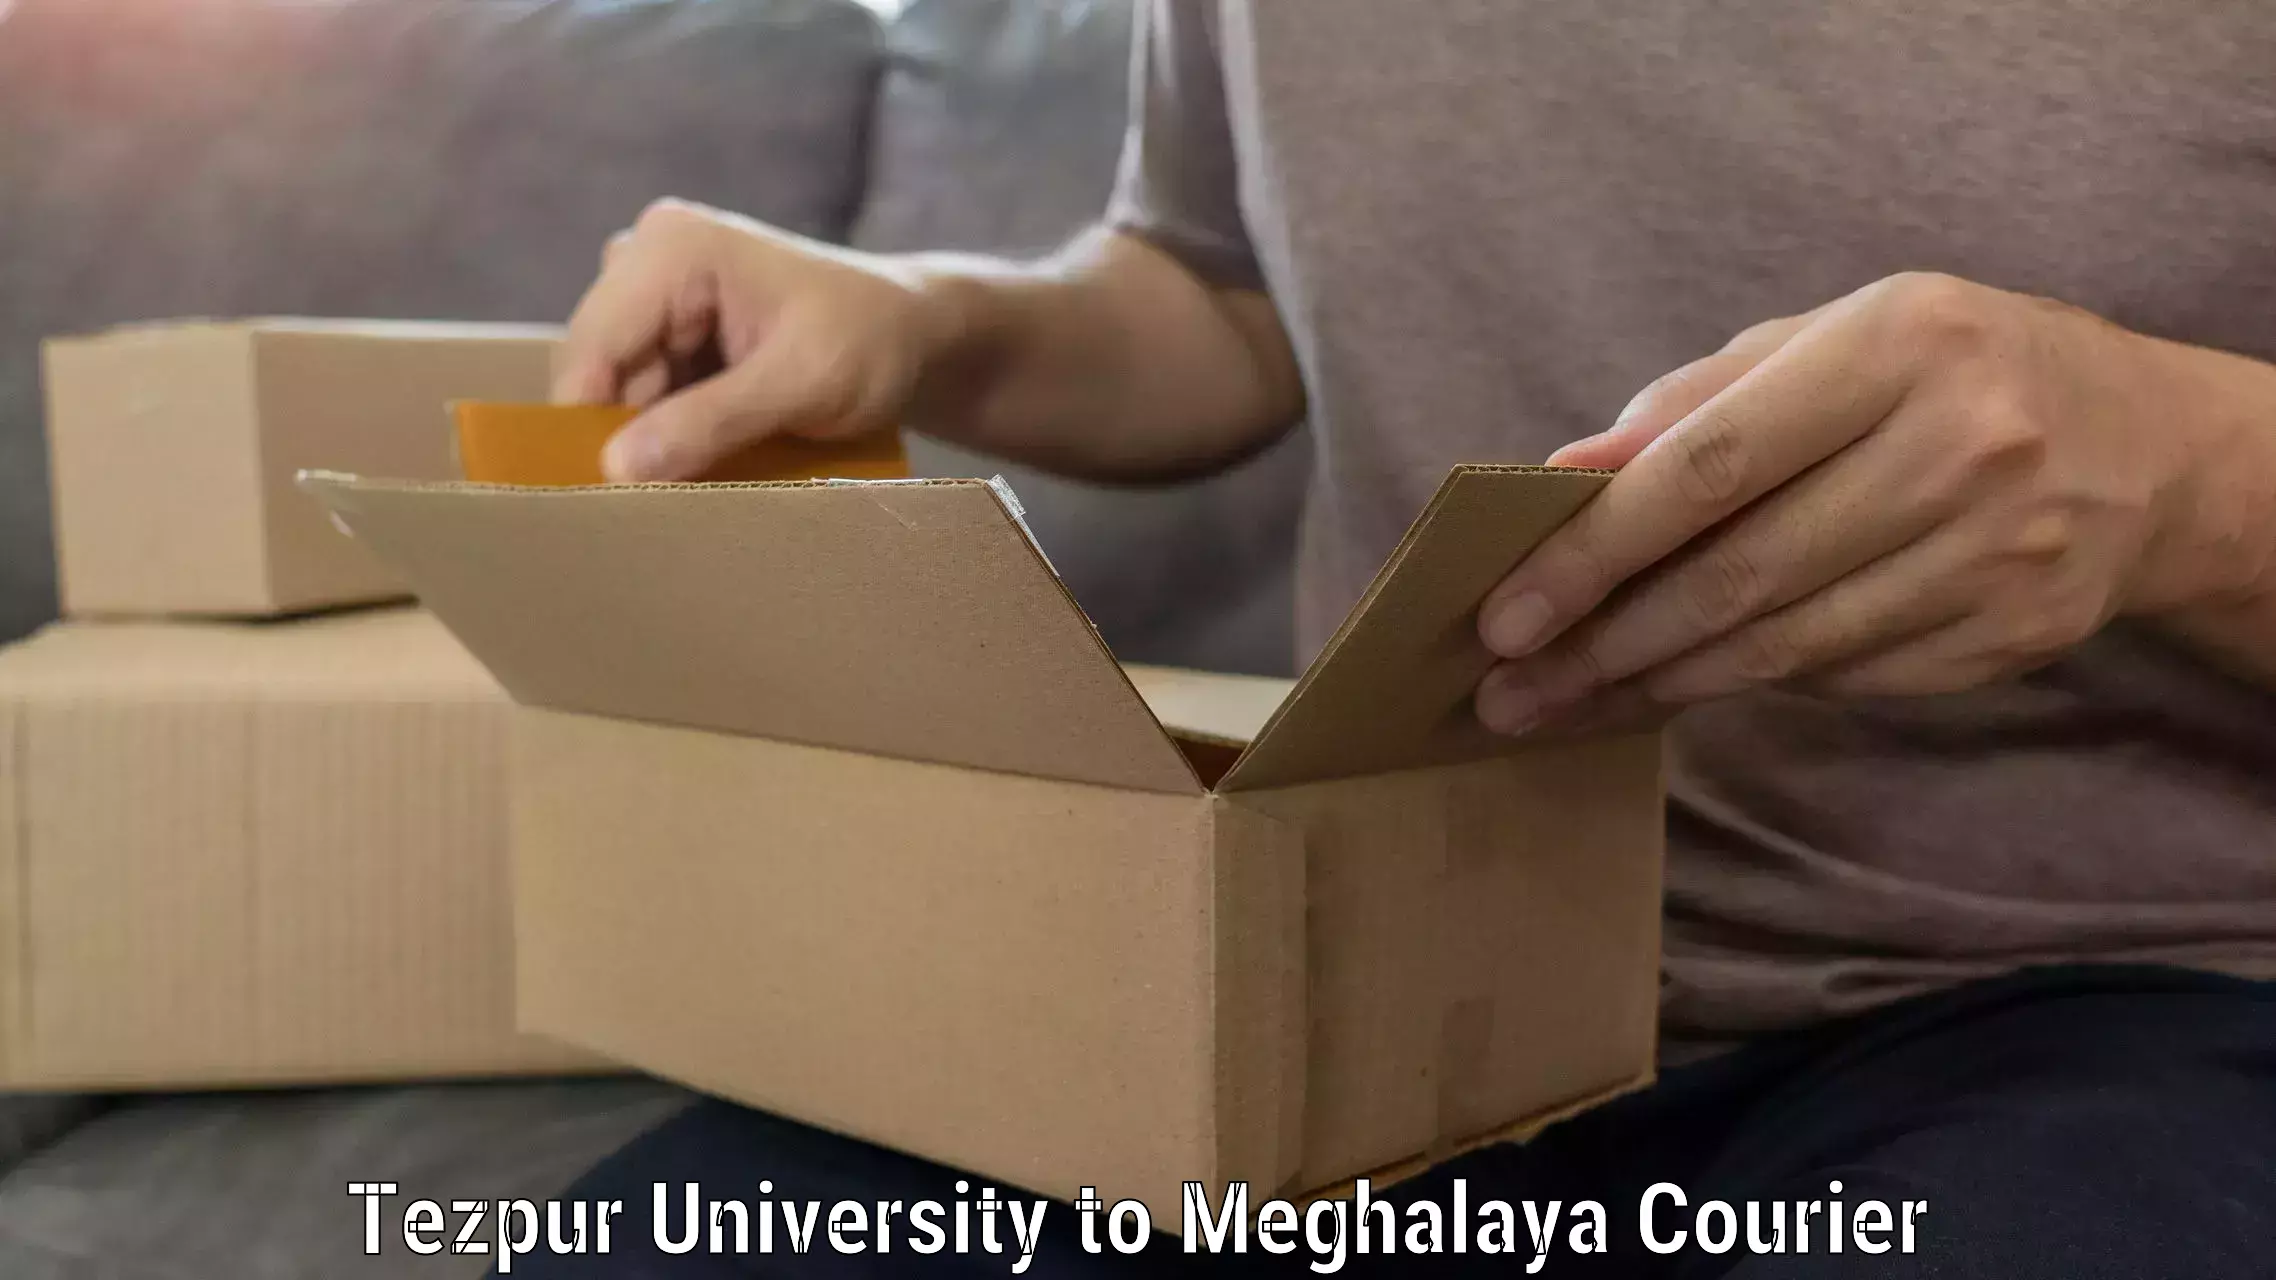 Household goods movers Tezpur University to Tura